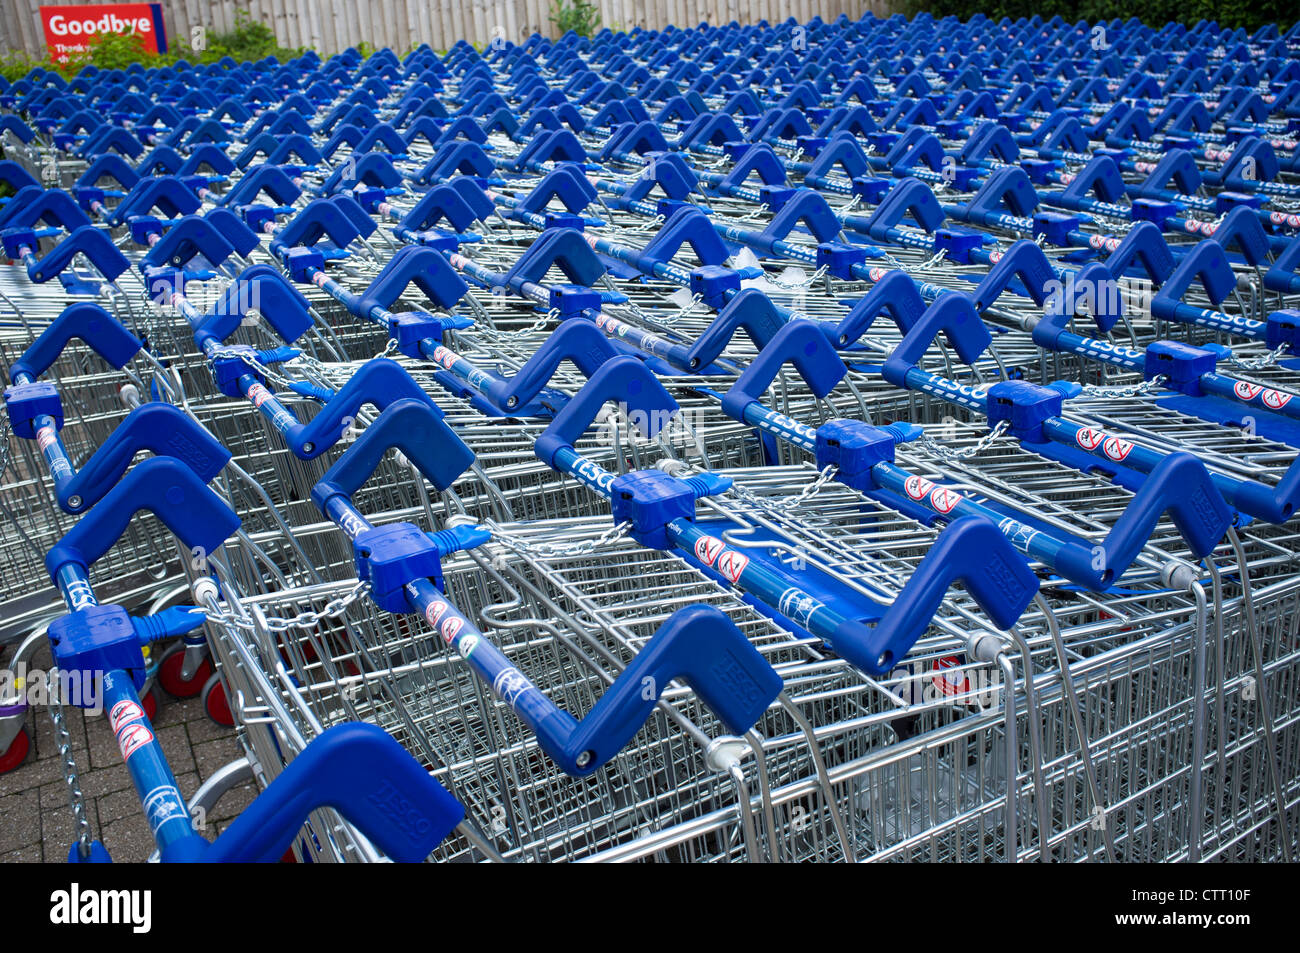 Supermarket Trolleys at Tesco Stock Photo